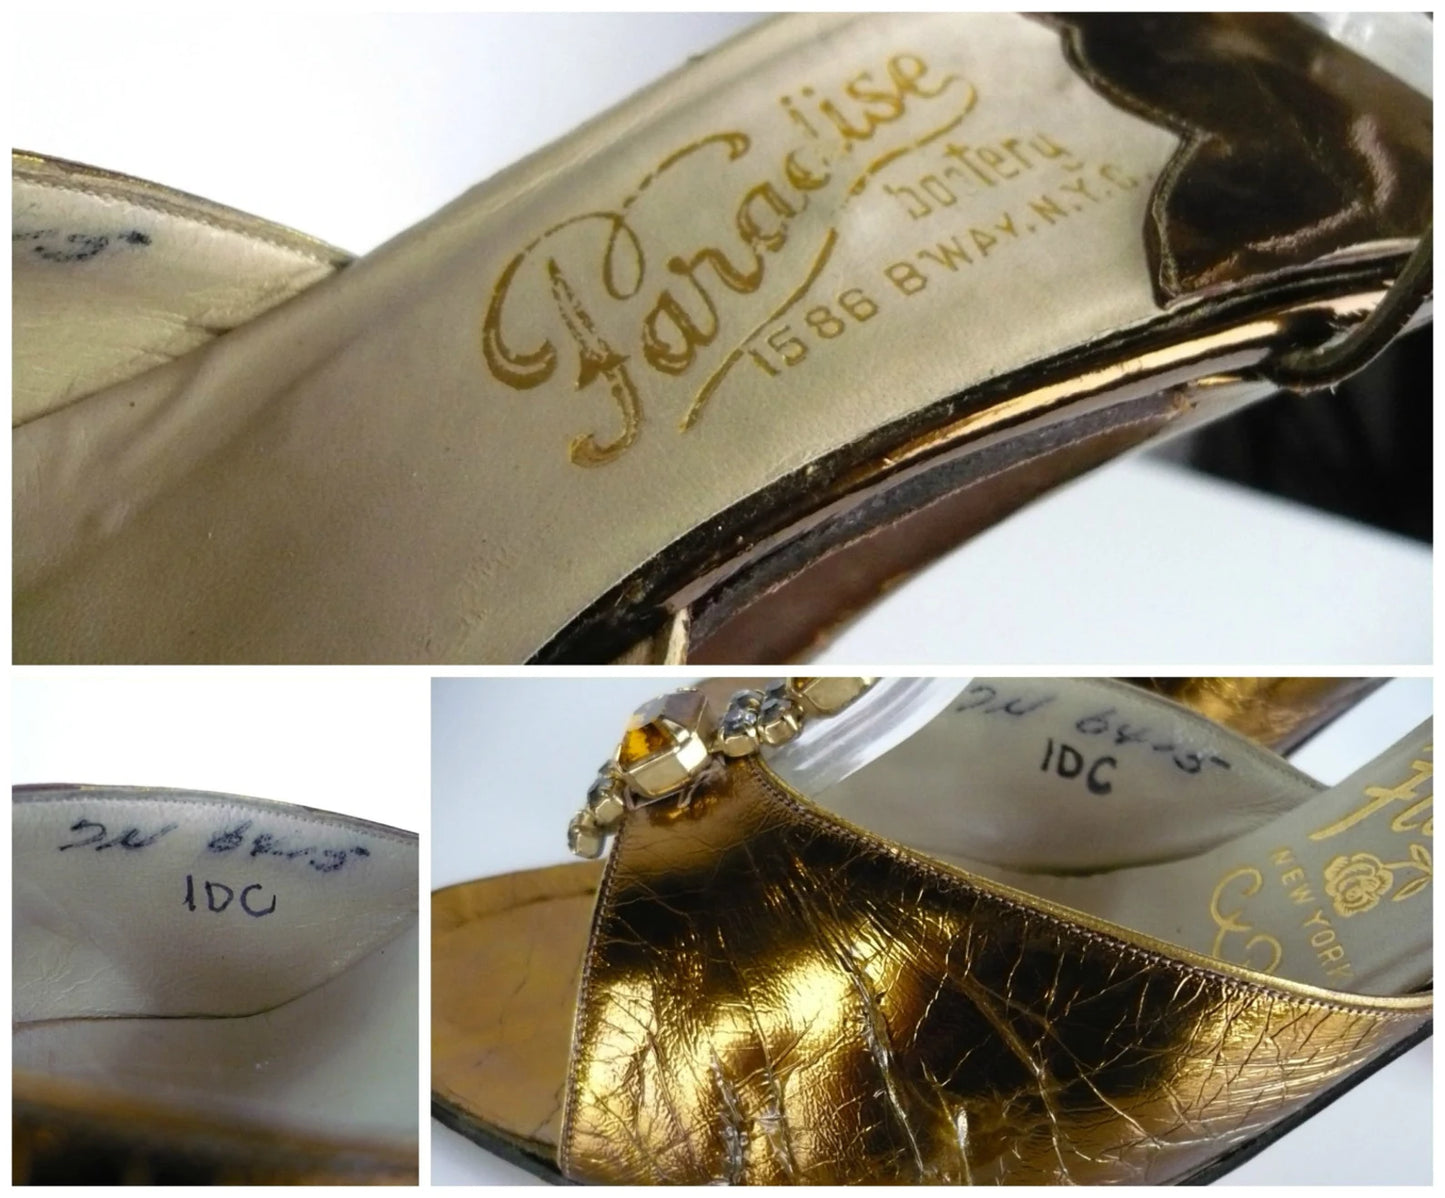 Vintage 50's Gold/Copper Metallic Leather High Heel Shoes, Rhinestone T-Strap, Sling Back High Heels, Henri Flatow Peep Toe Sandals